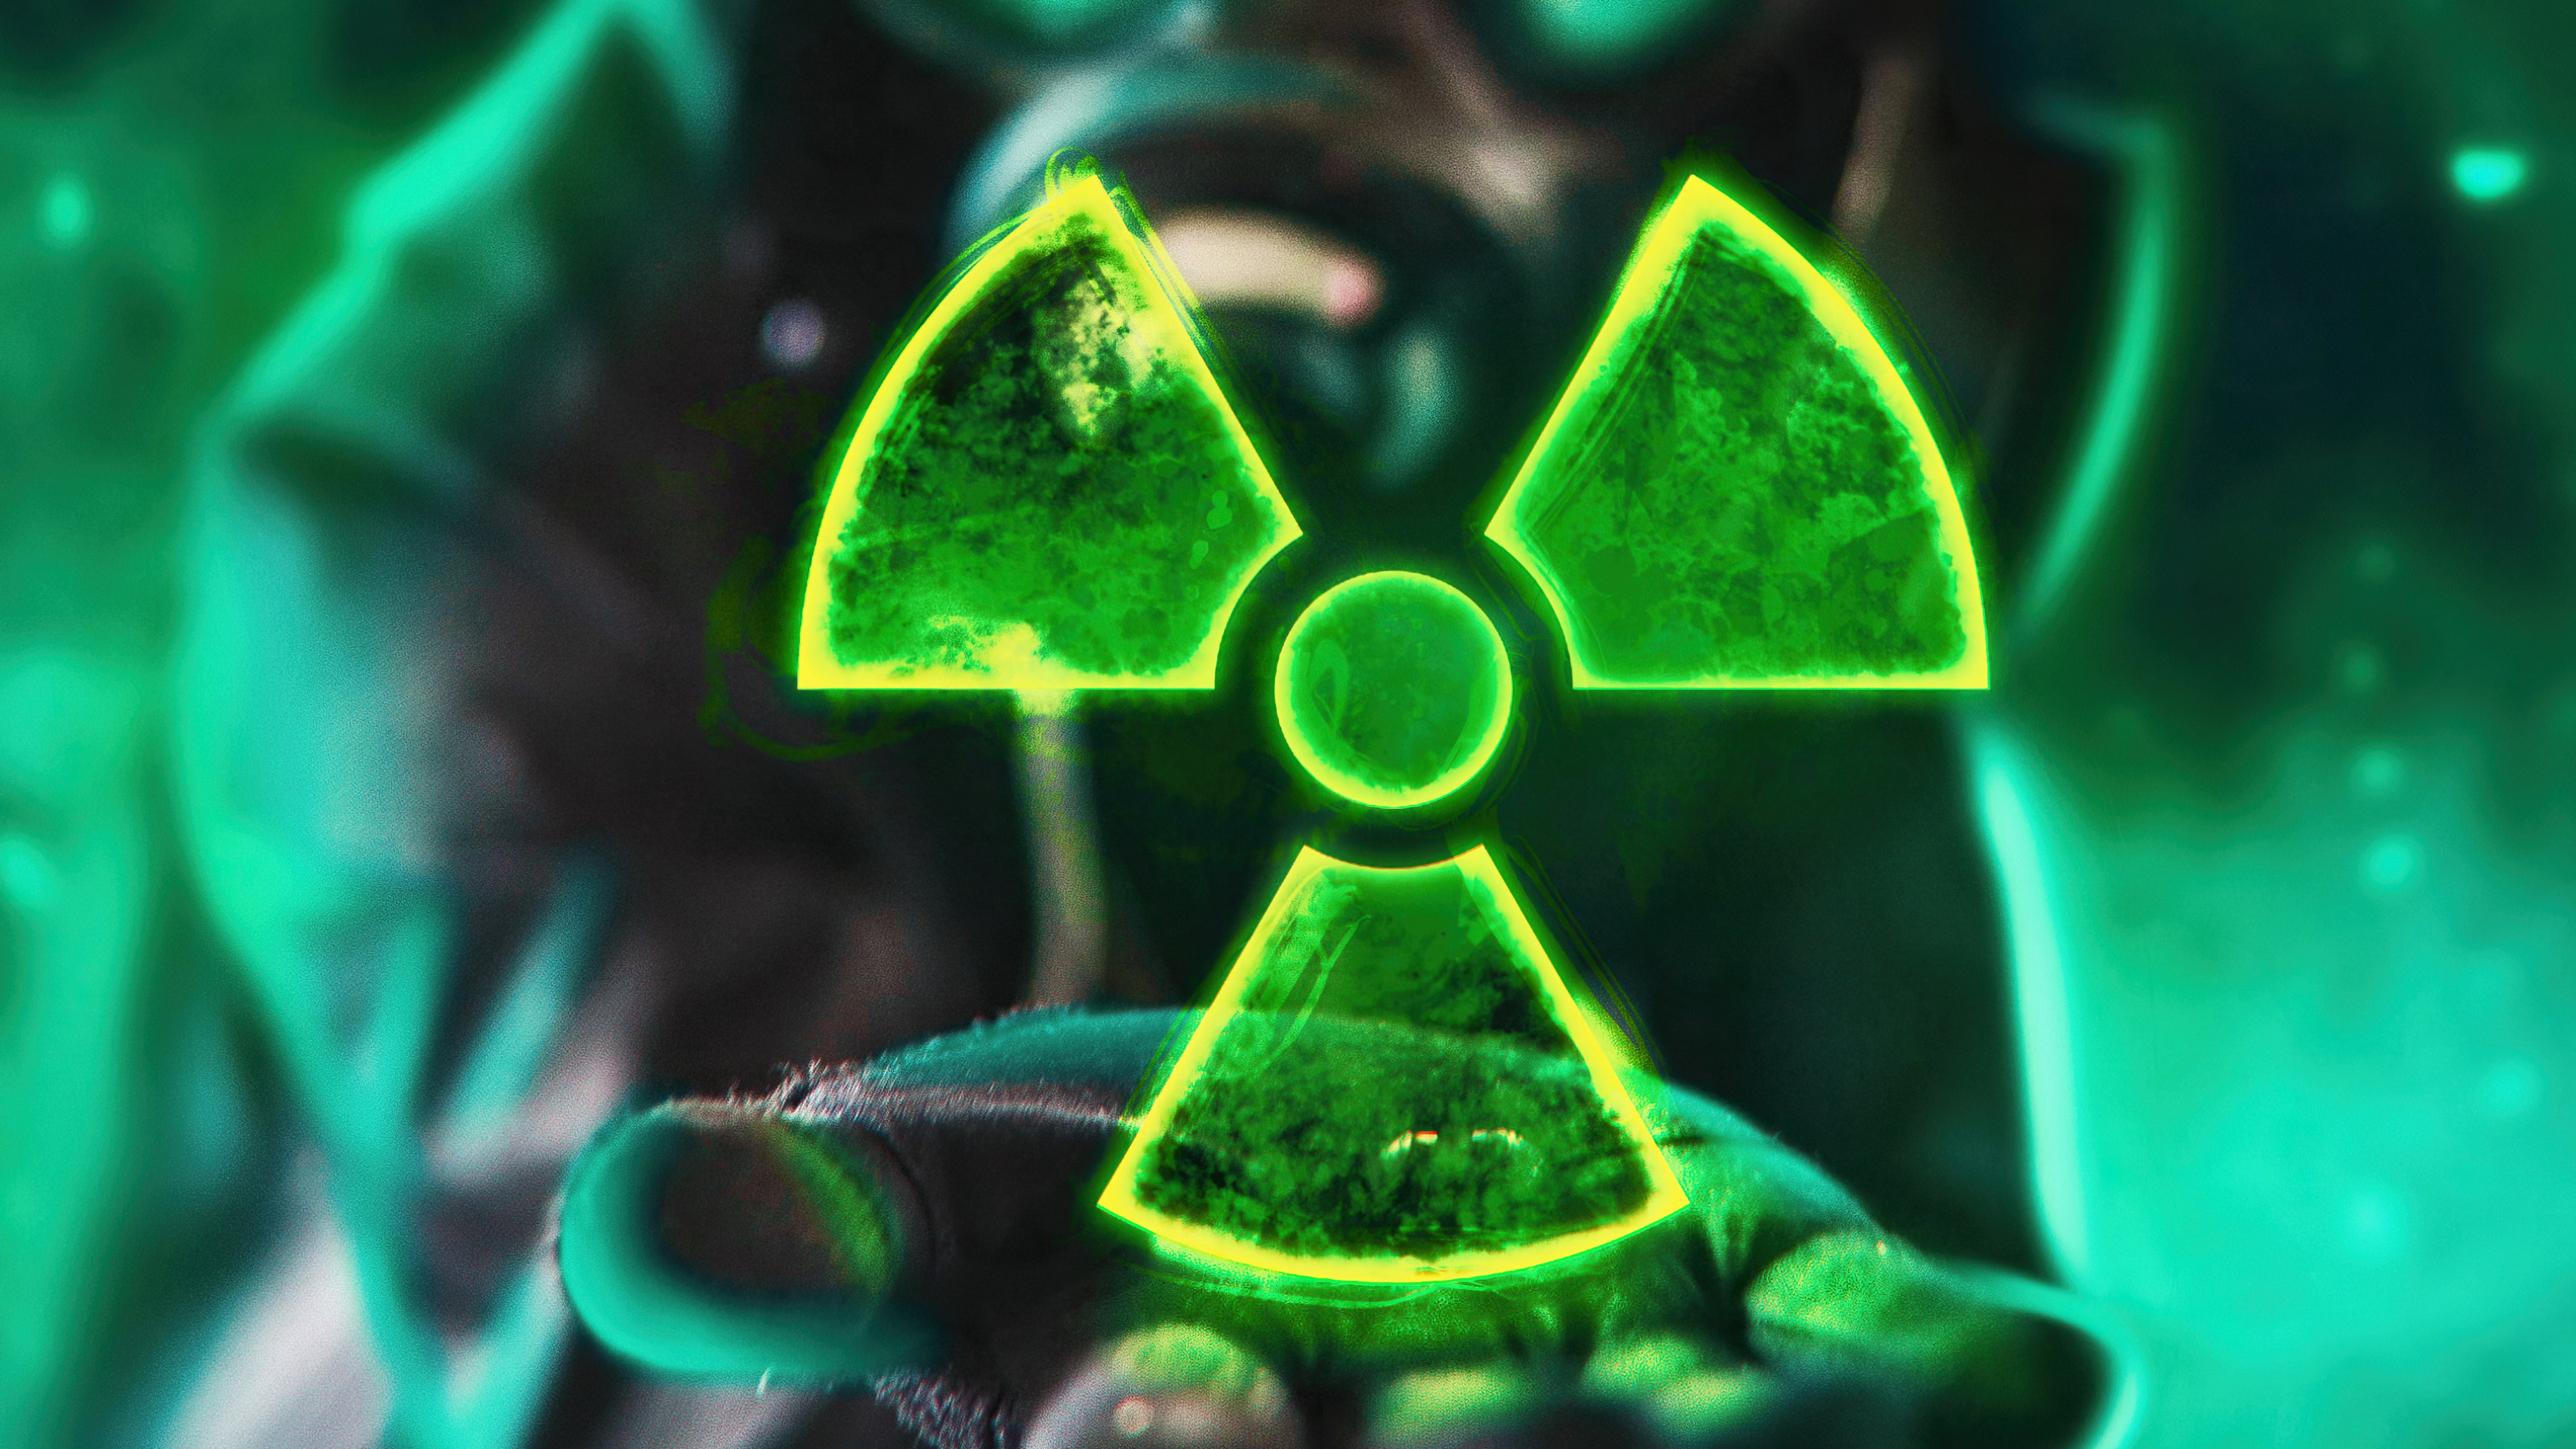 Radioactive sign Neon Wallpaper ID:5513